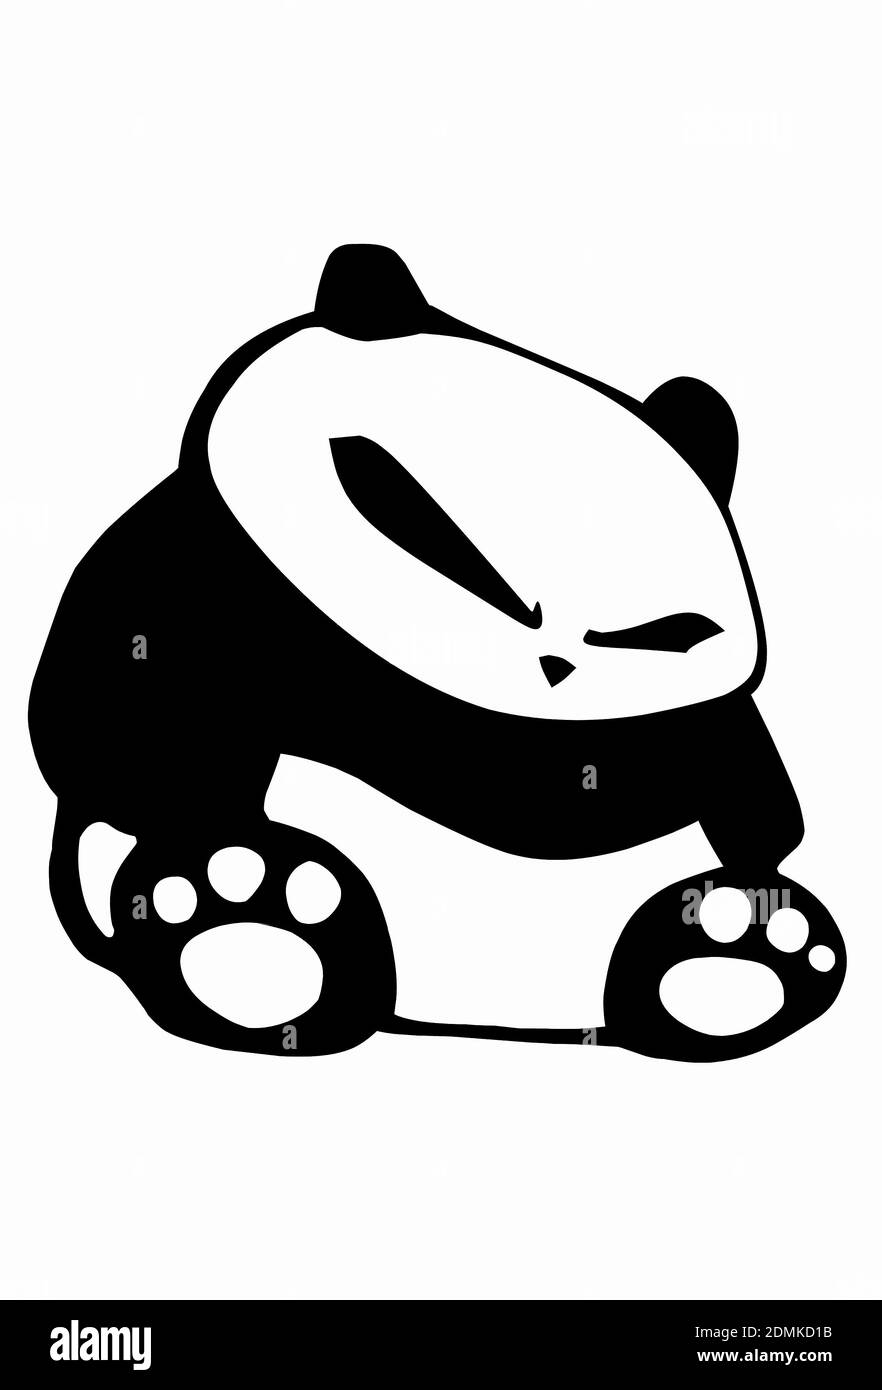 Cartoon panda Black and White Stock Photos & Images - Alamy